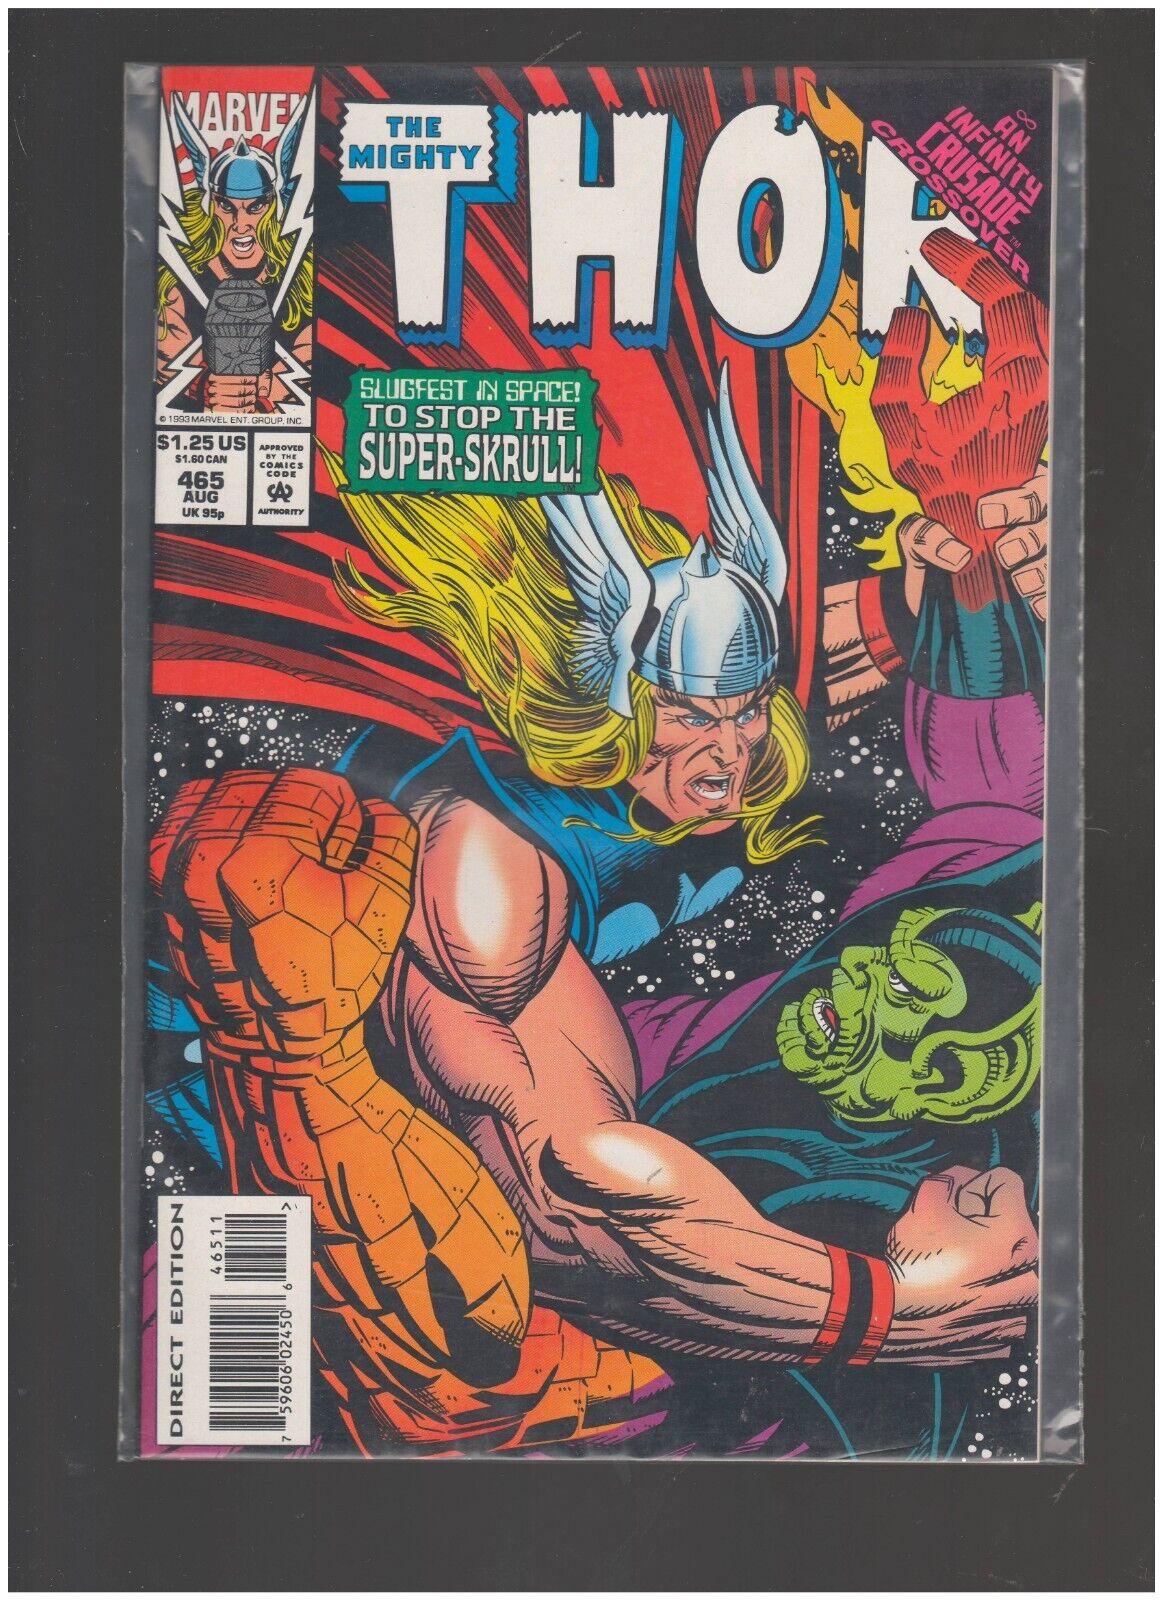 The Mighty Thor #465 Vol. 1 Marvel Comics 1993 MCU